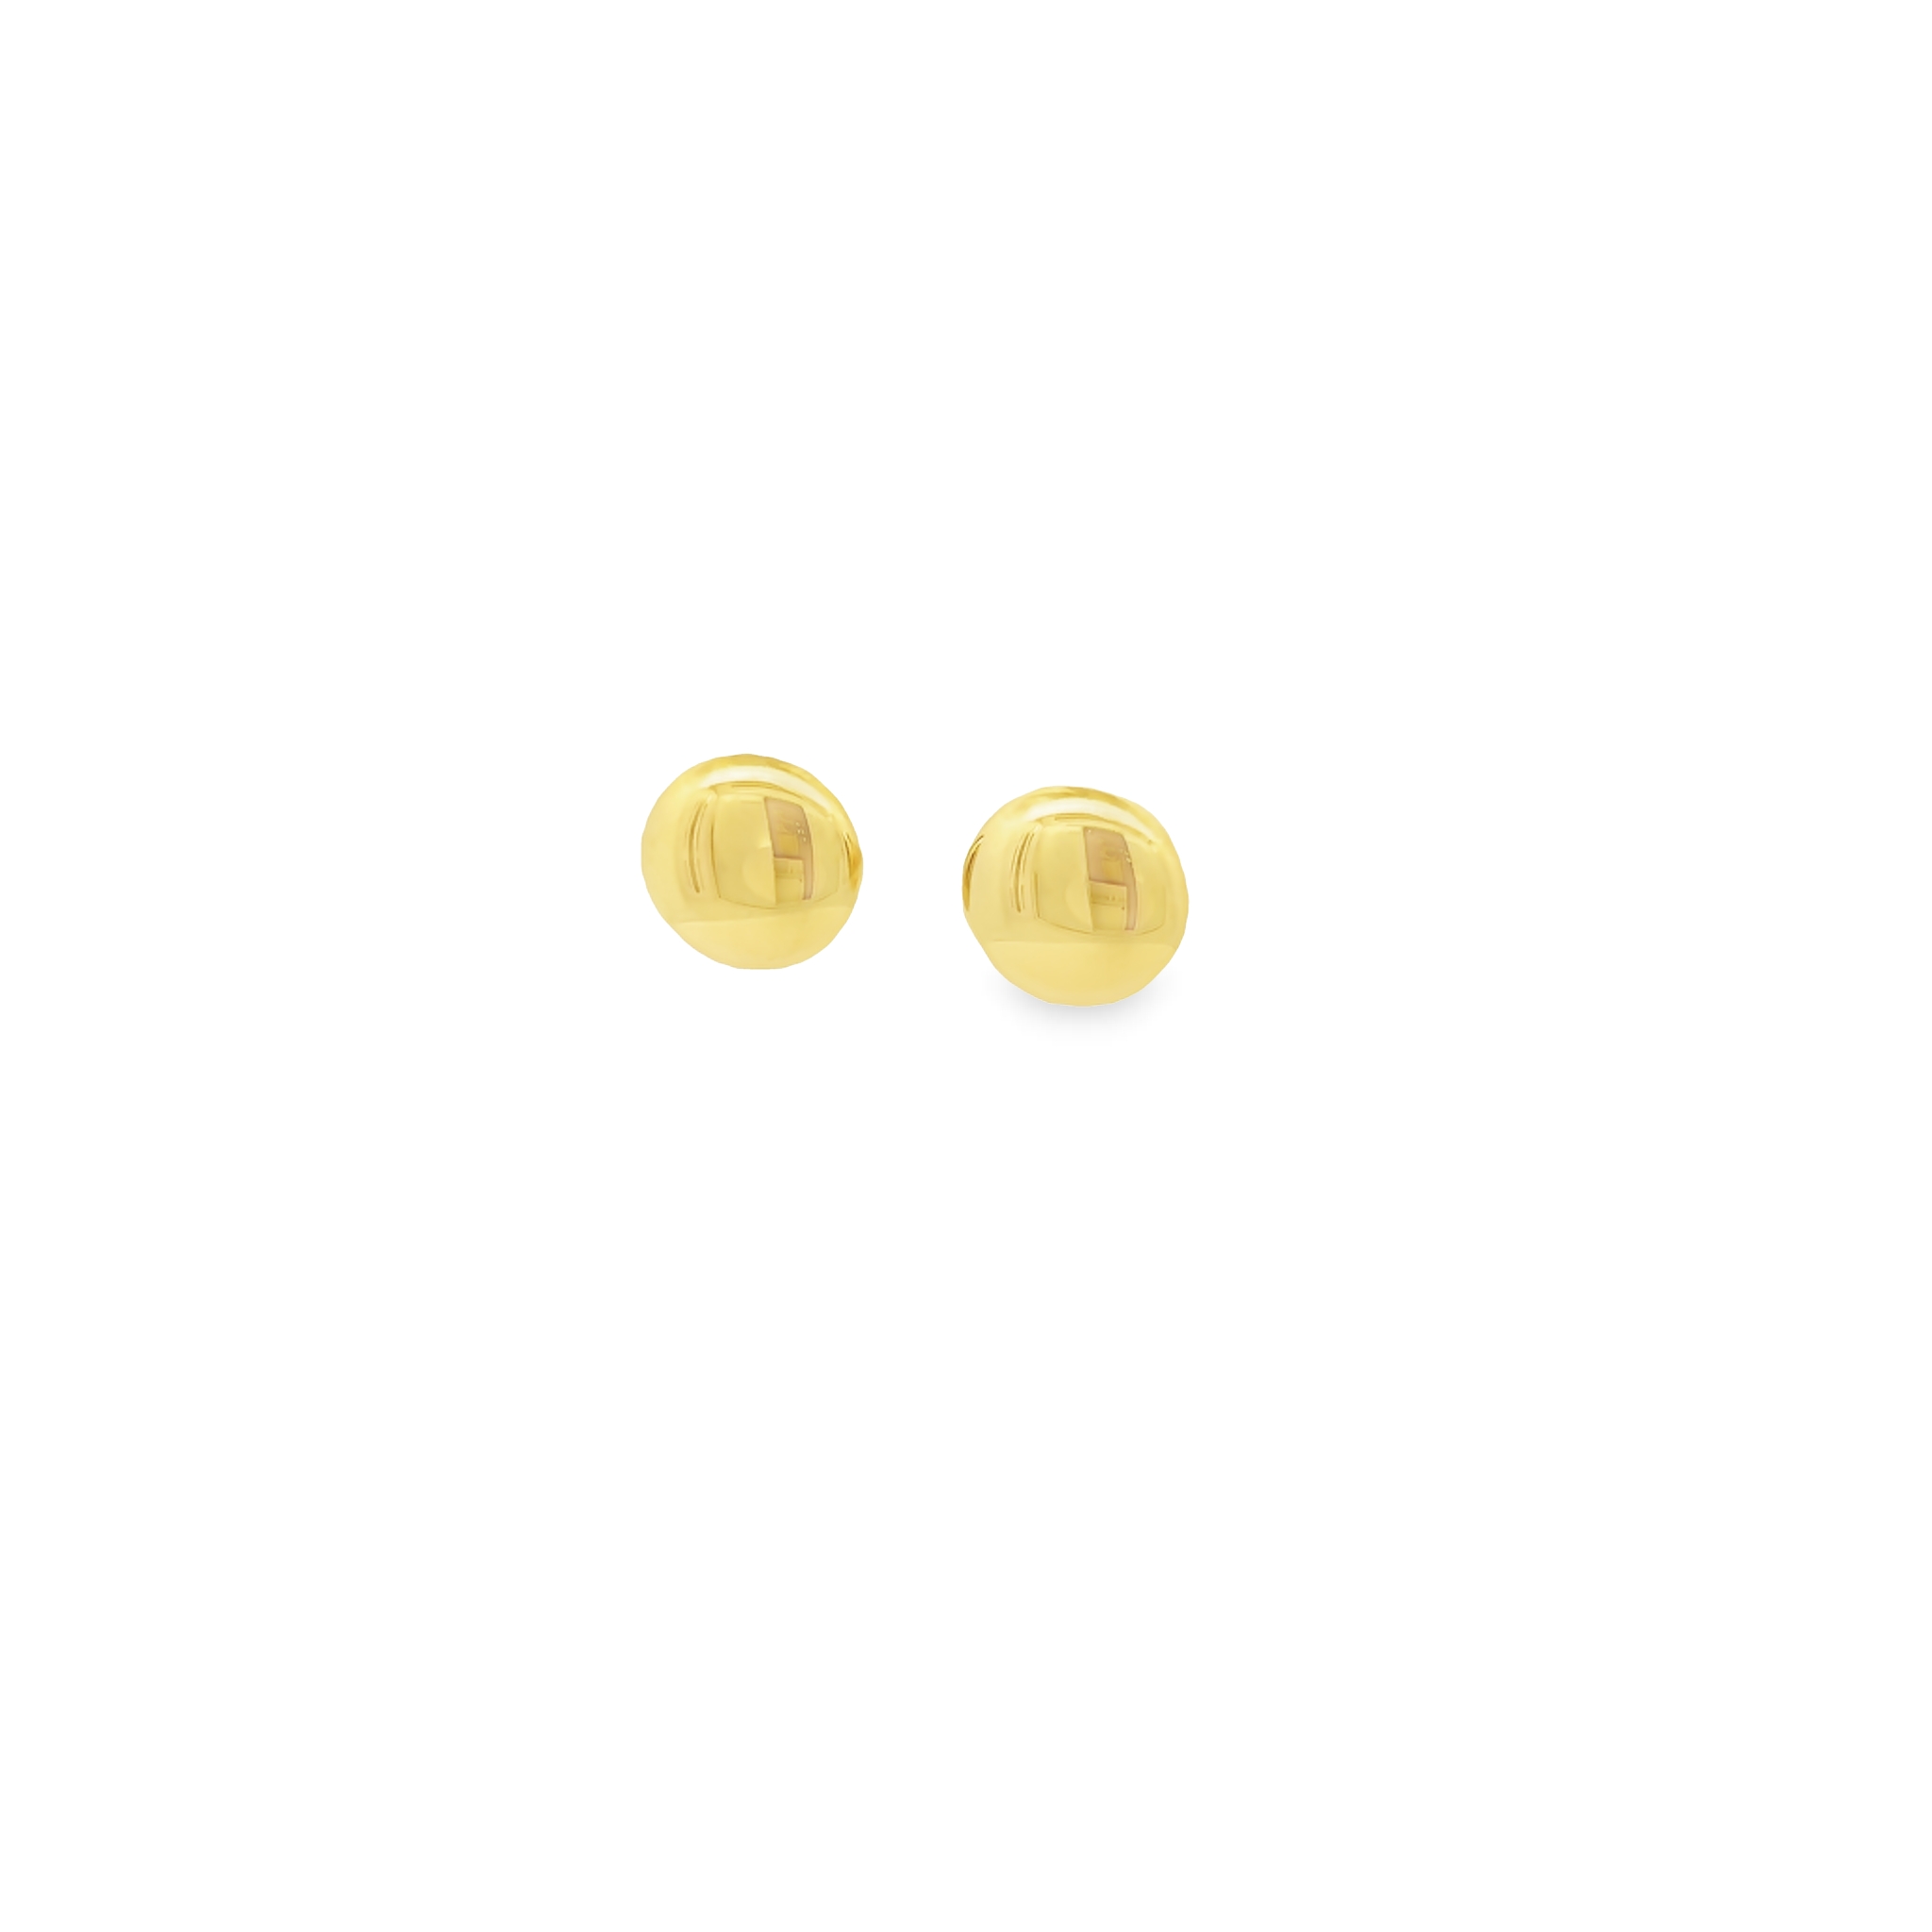 10mm 14k Yellow Gold Button Stud Earrings